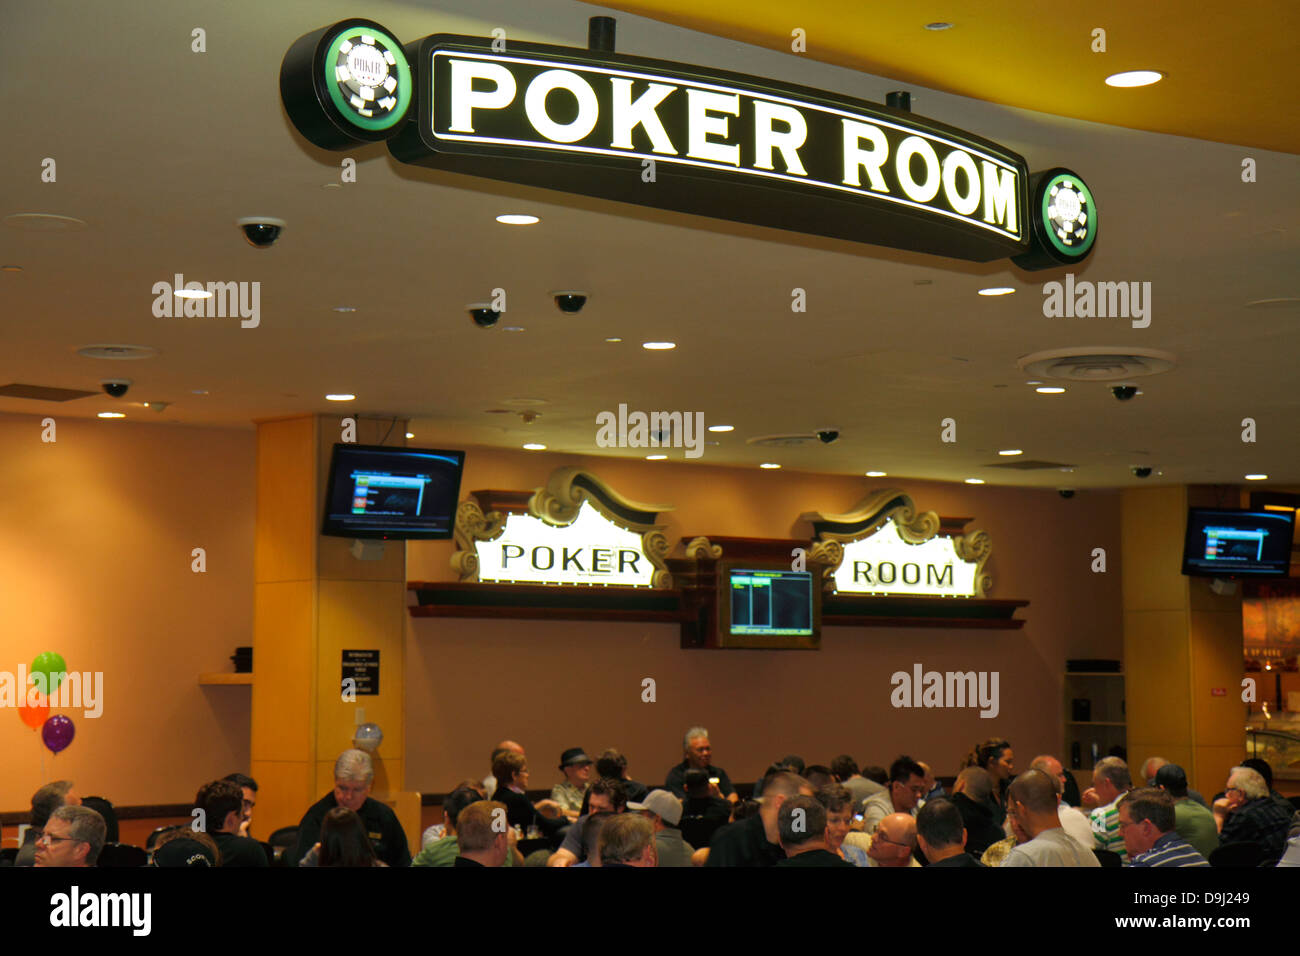 Las Vegas Nevada,The Strip,South Las Vegas Boulevard,Bally's Las Vegas Hotel & Casino,gamble,gambling,gamblers,players,poker,guest,room,NV130330026 Stock Photo